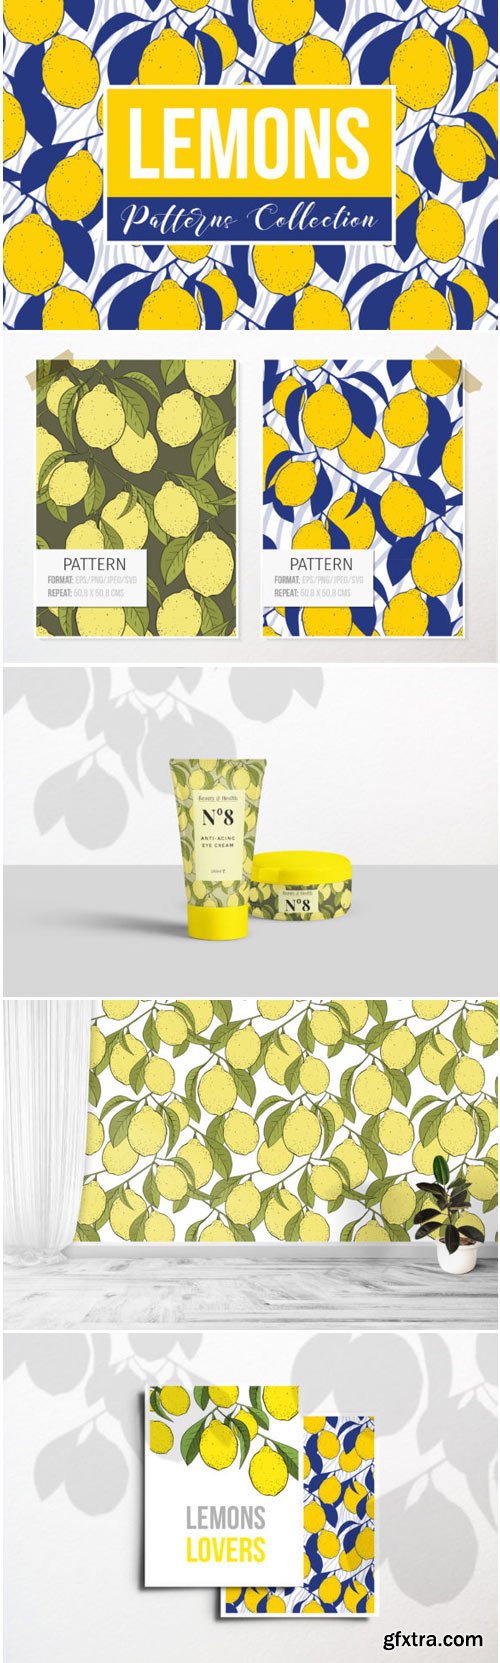 Lemons Patterns Collection 1697864